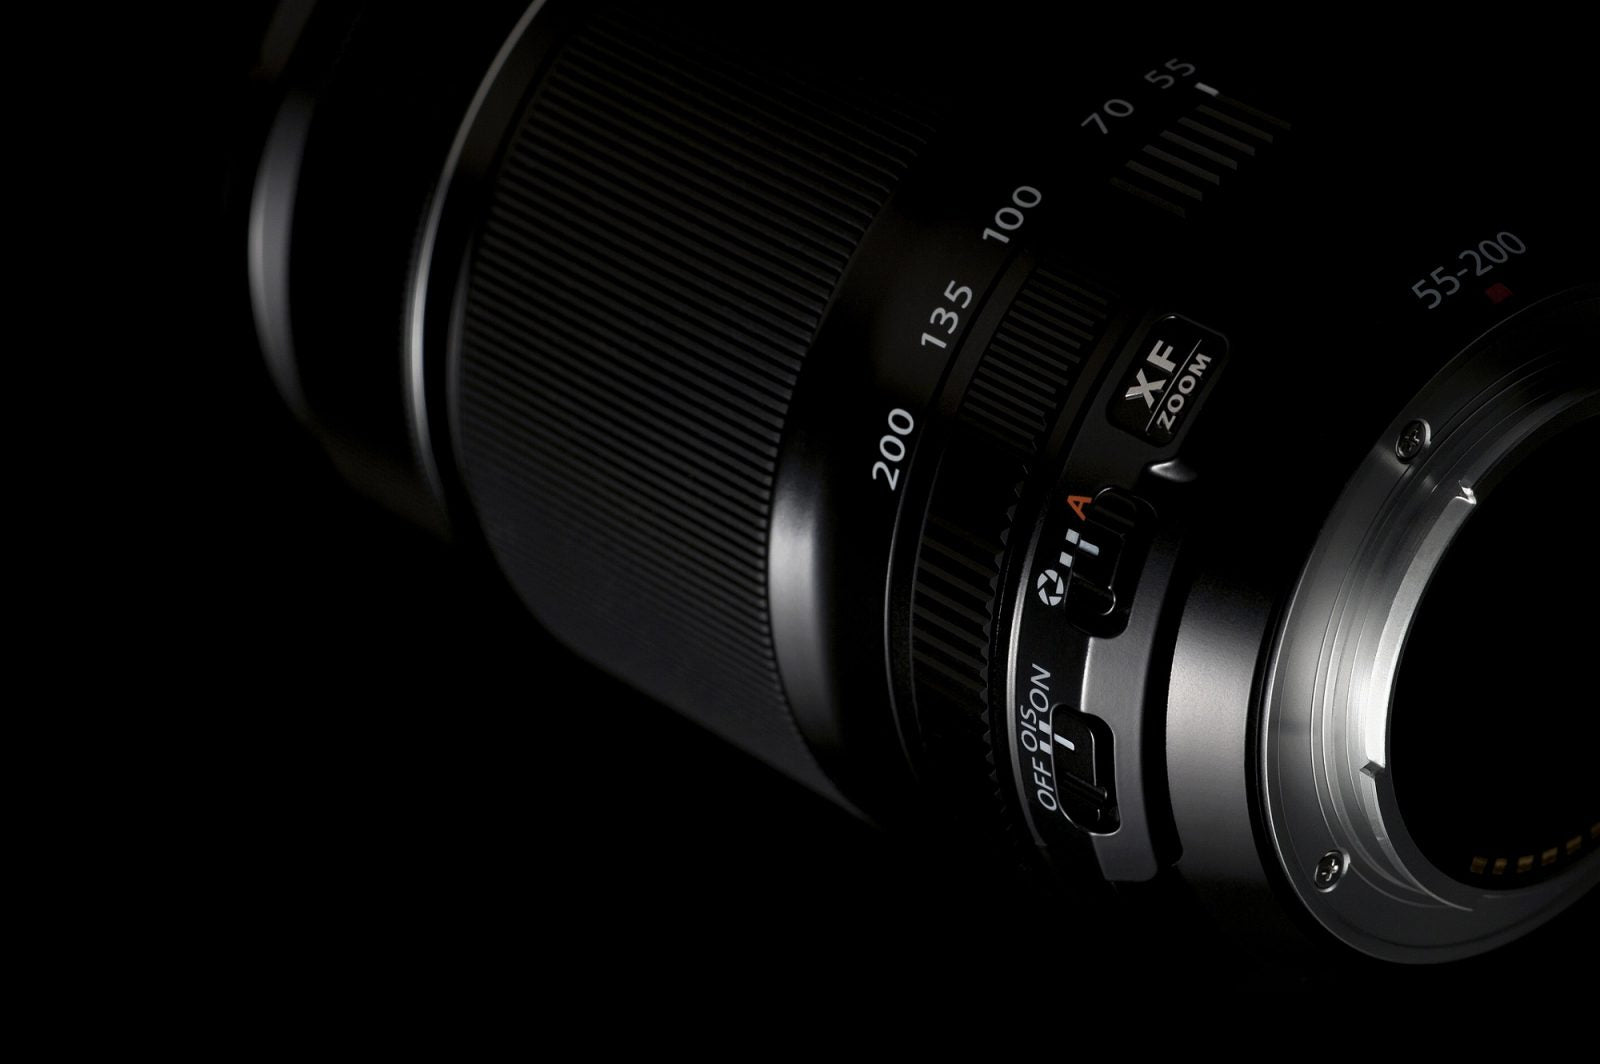 Fujifilm Announces the XF55-200mmF3.5-4.8 R LM OIS Telephoto Lens